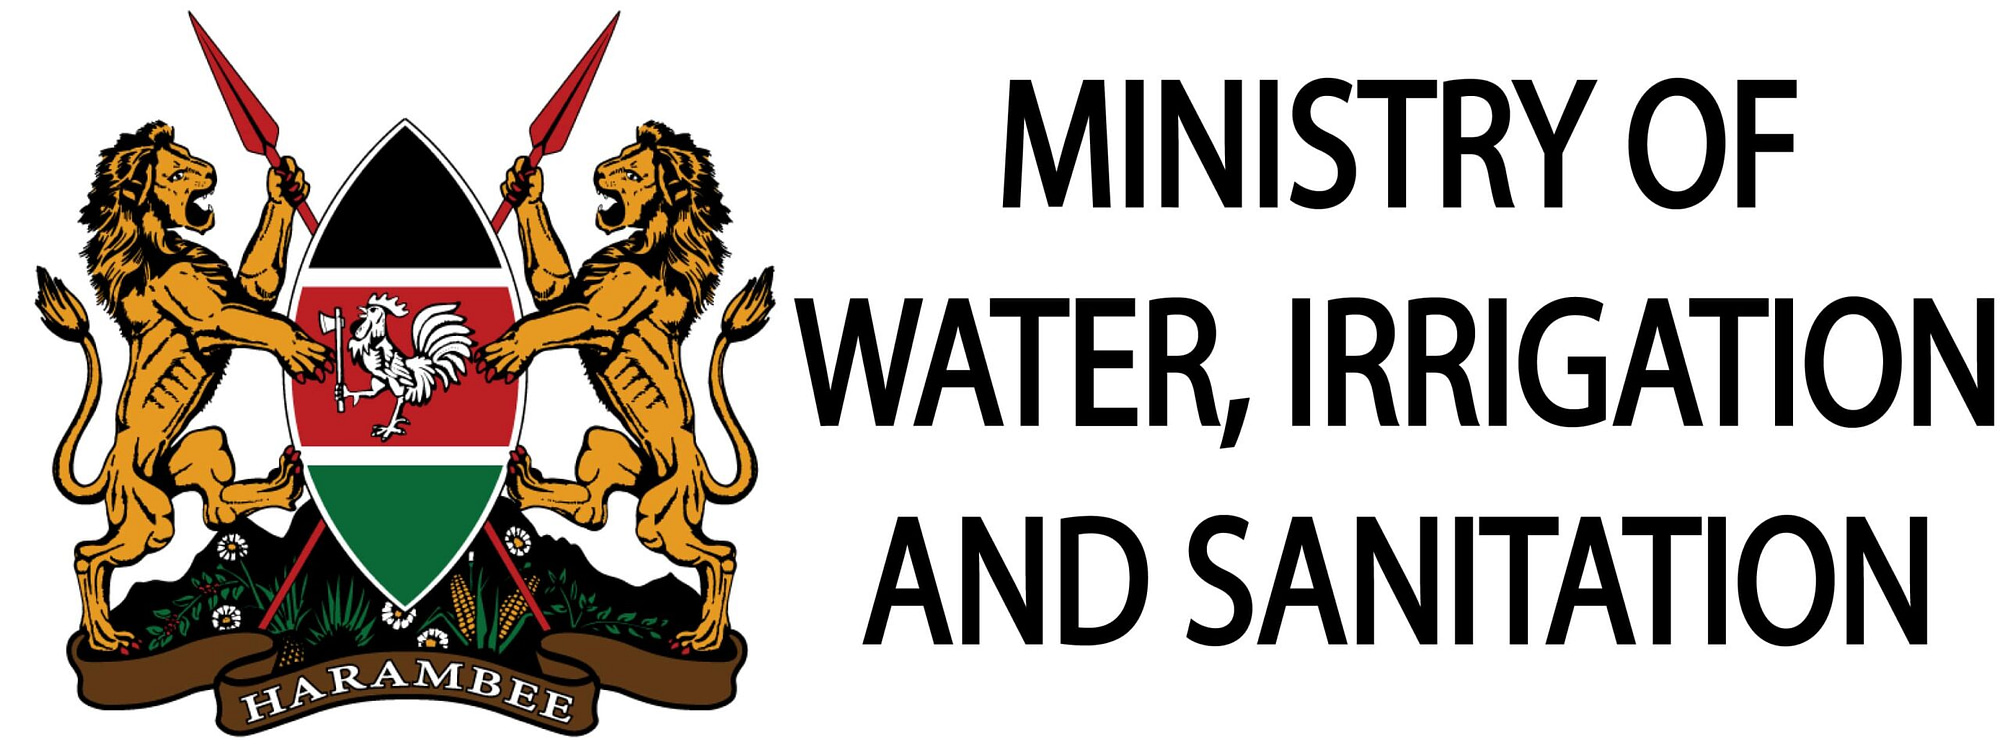 ministry-of-water-irrigation-and-sanitation-kenya